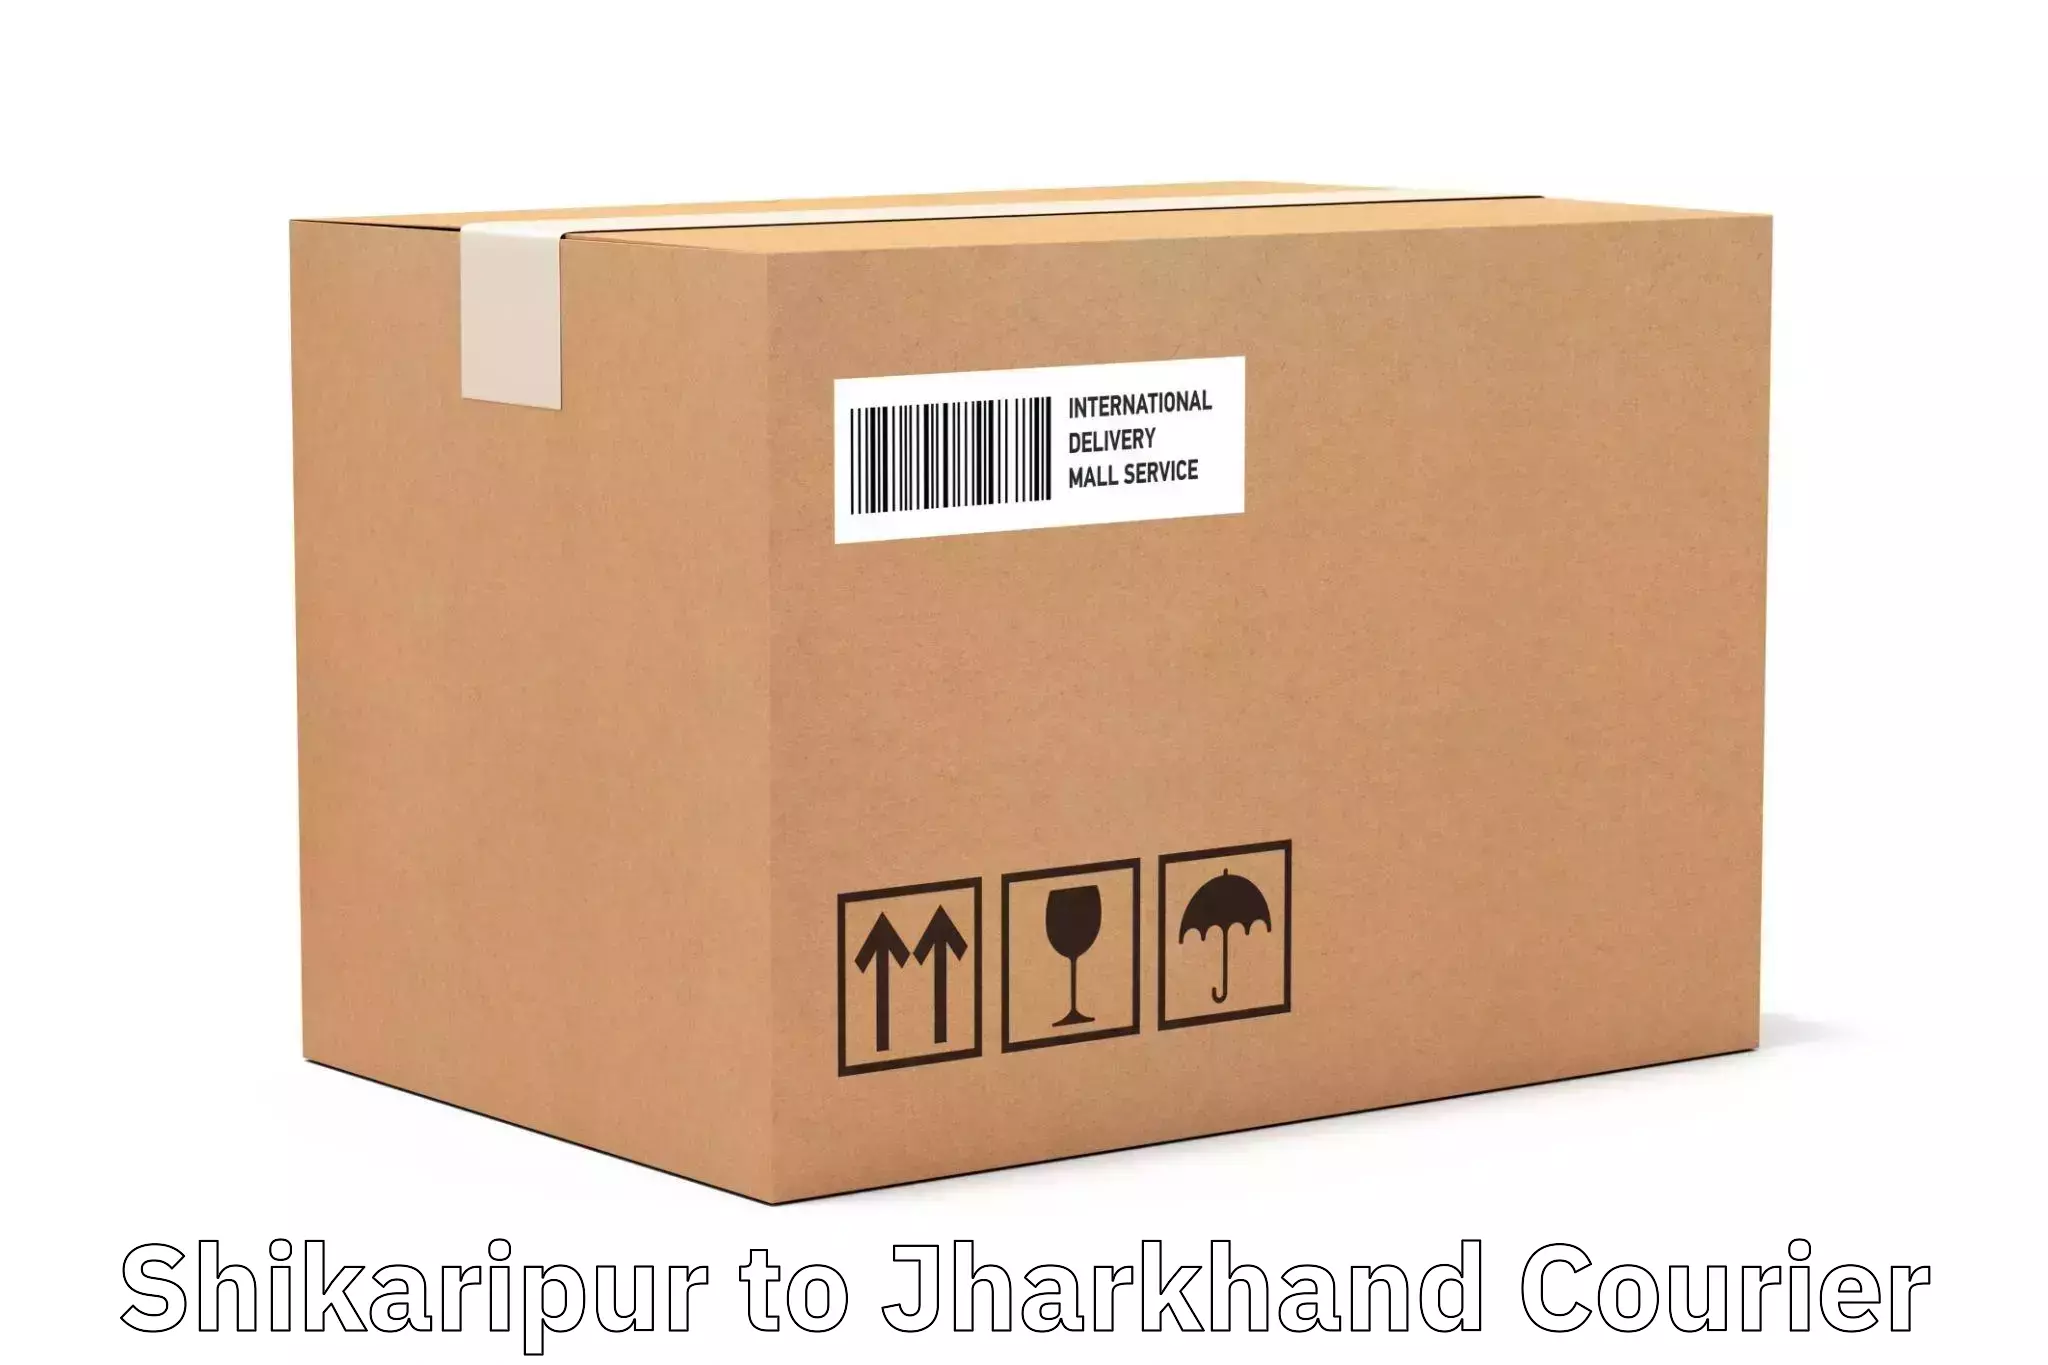 Global logistics network Shikaripur to Jharkhand